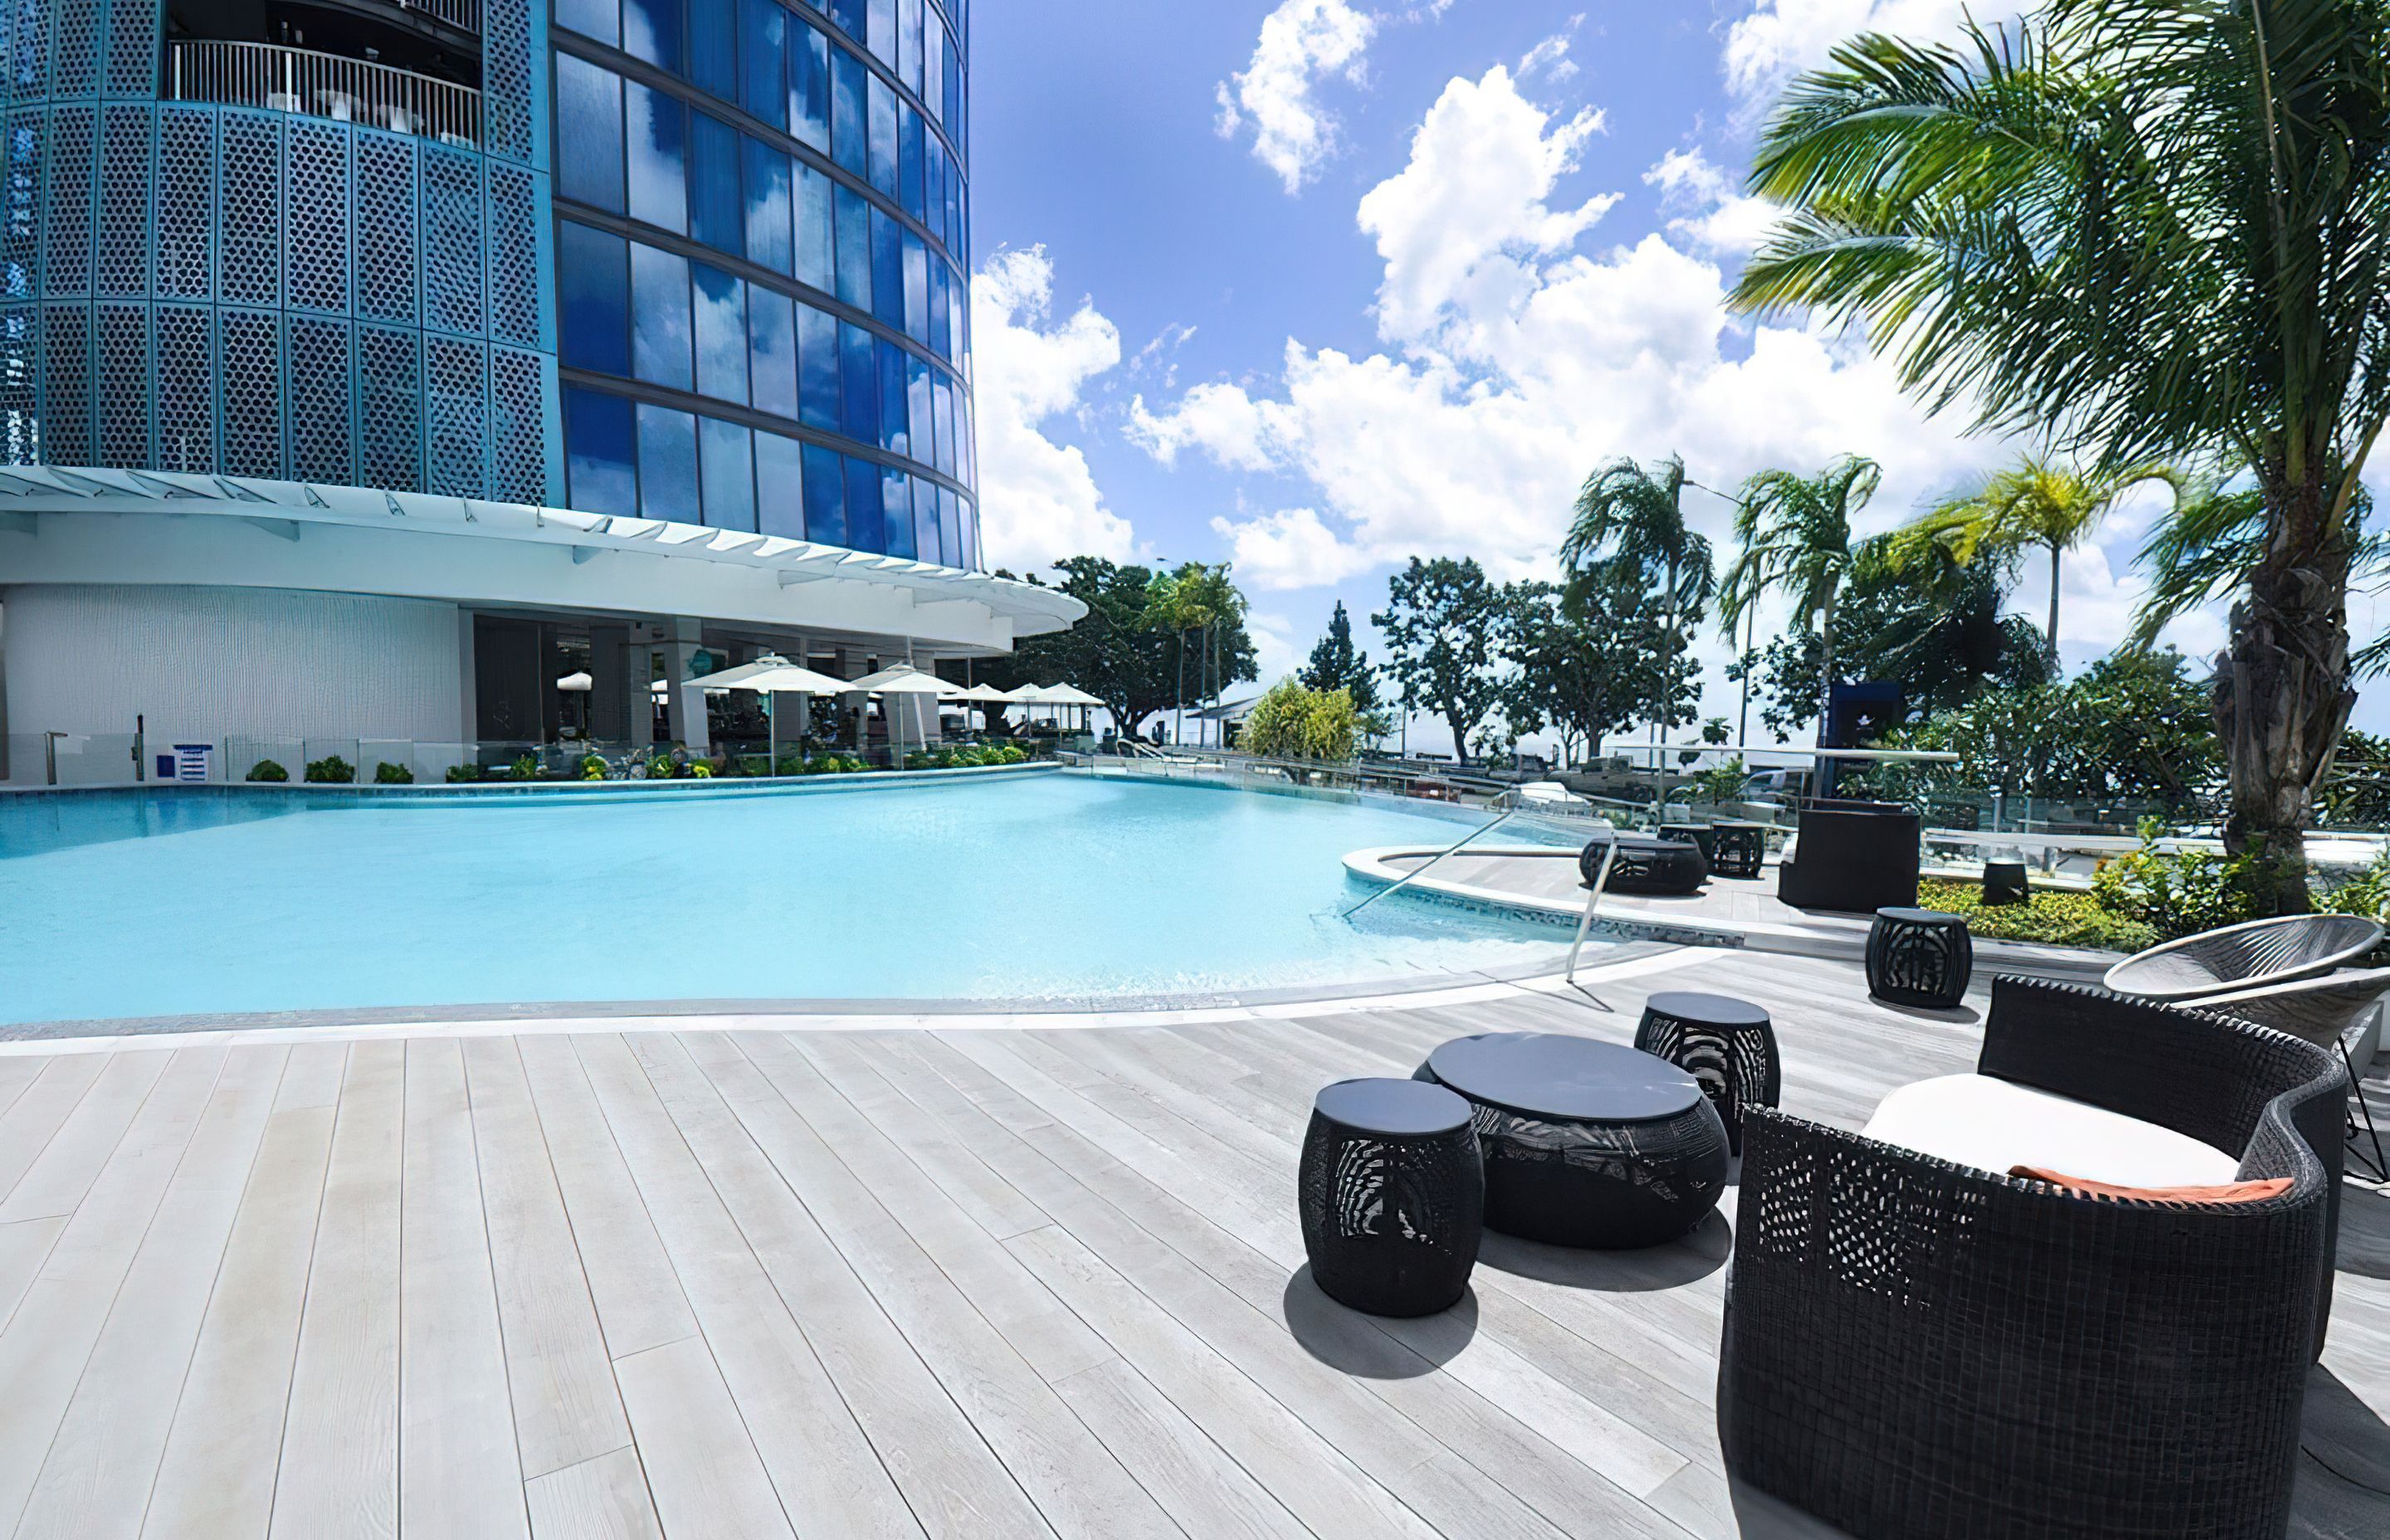 Stunning 5 Star Hotel Resort pool decking in Cairns.